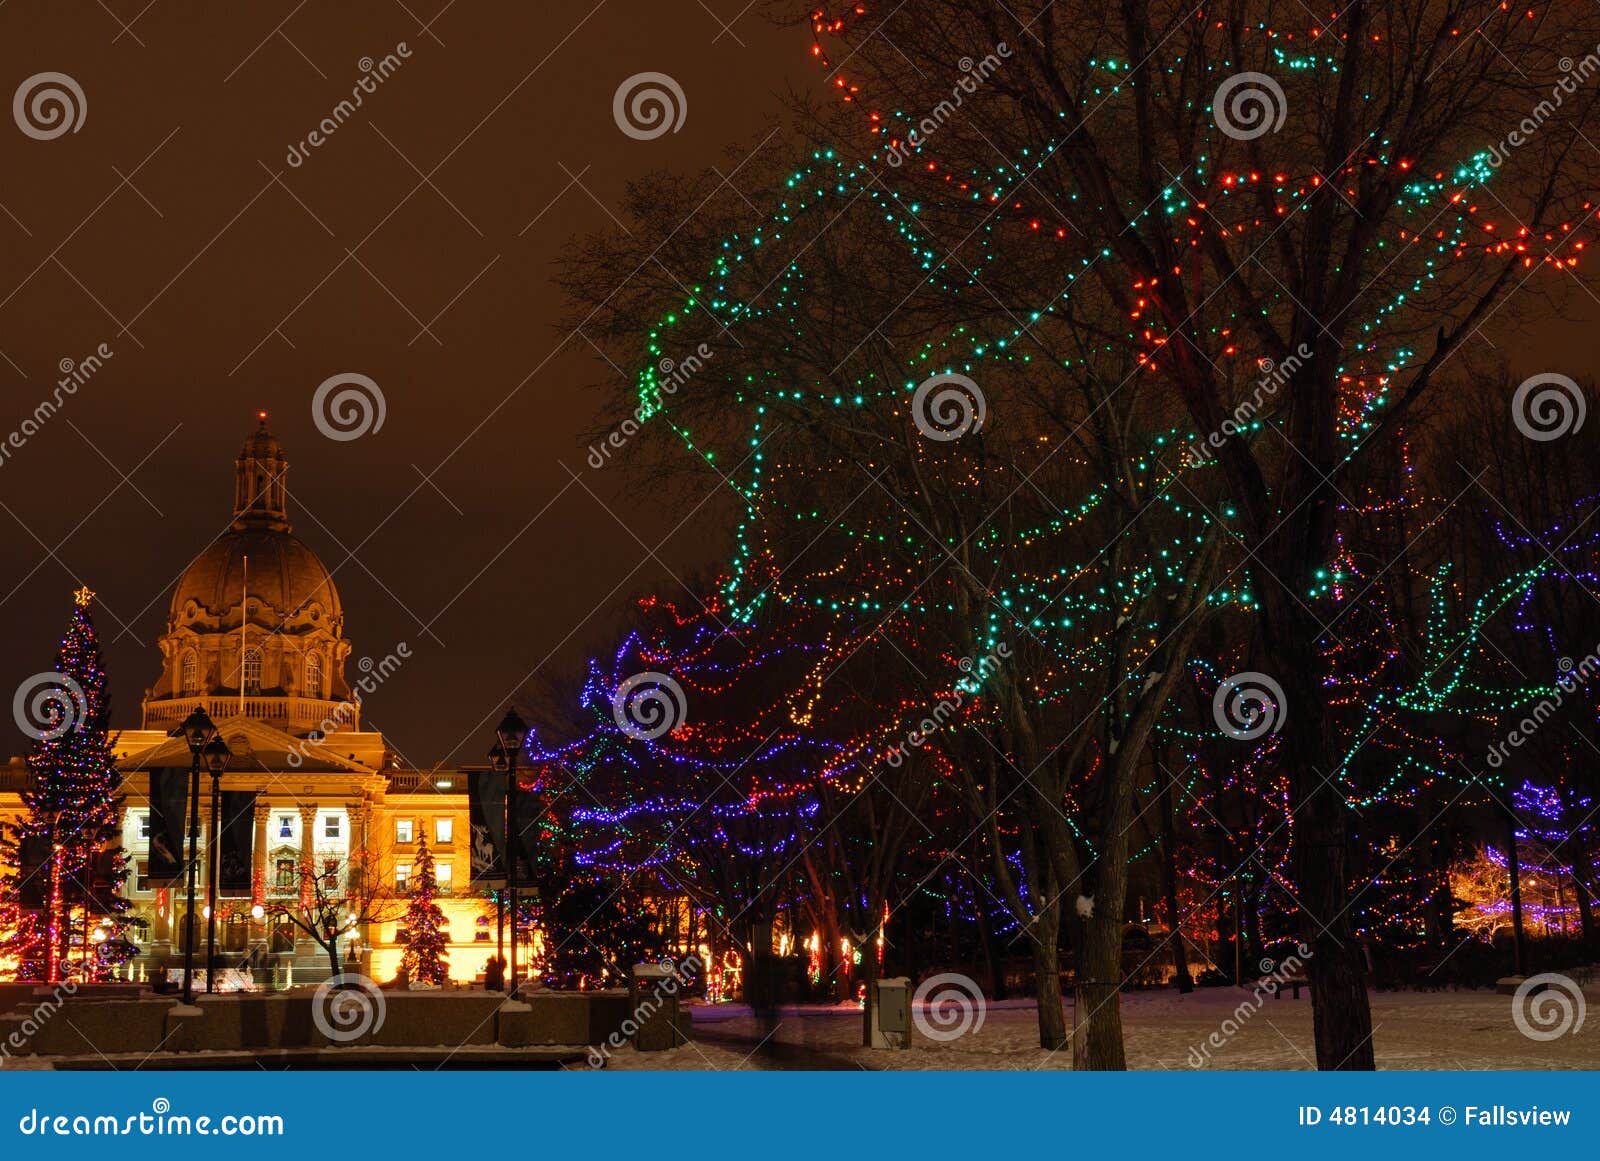 holiday lights of legislature building